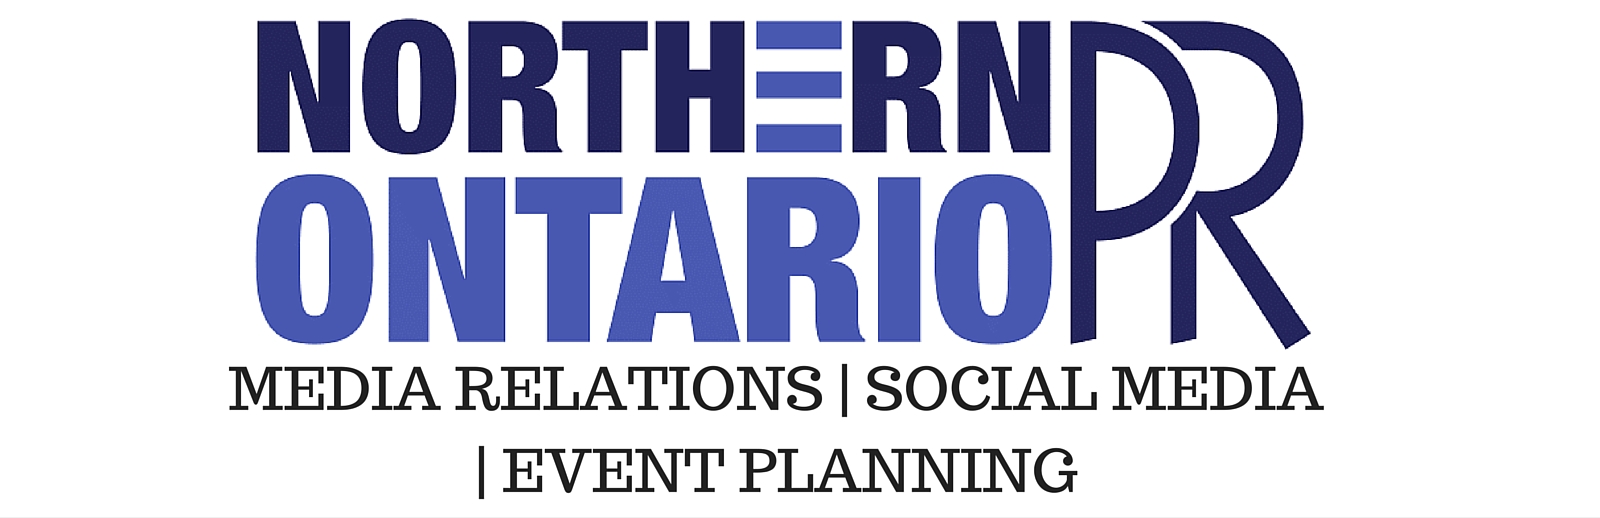 Northern Ontario PR Celebrates 1 Year